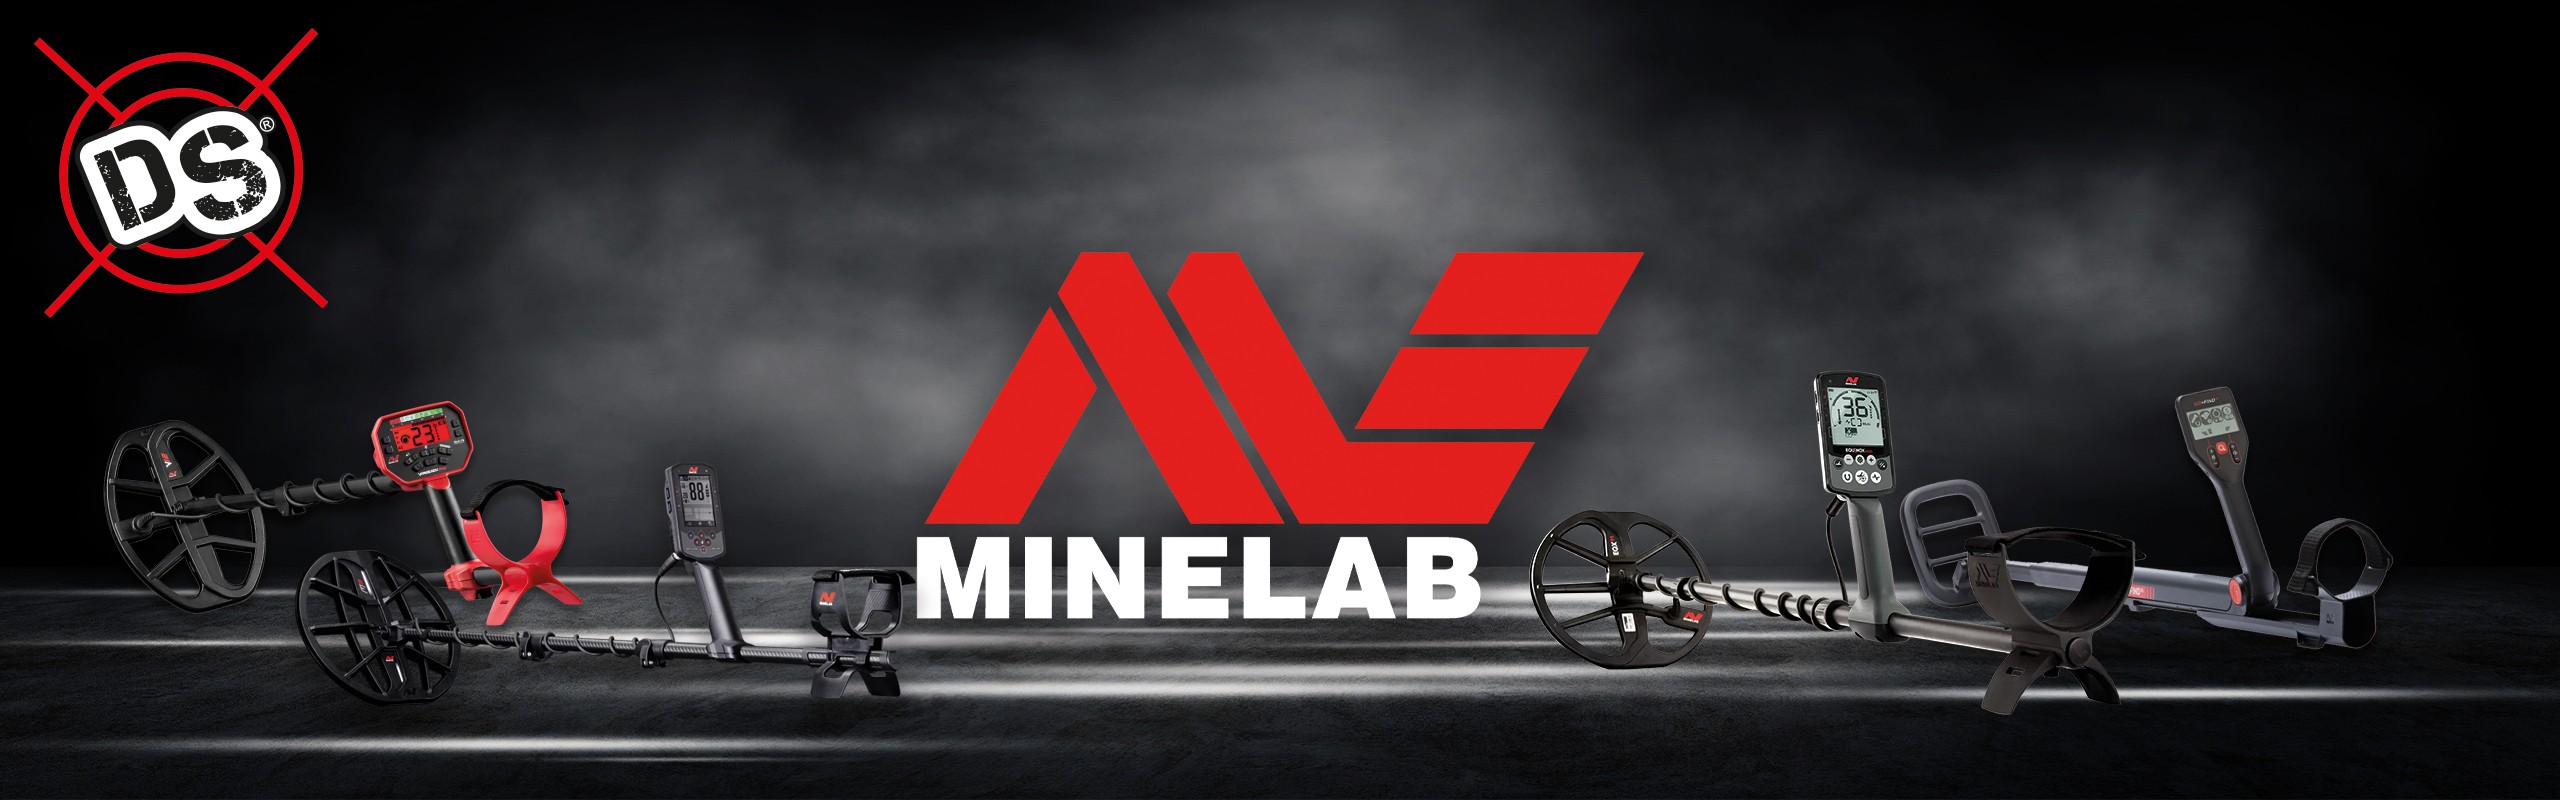 Minelab Partnership